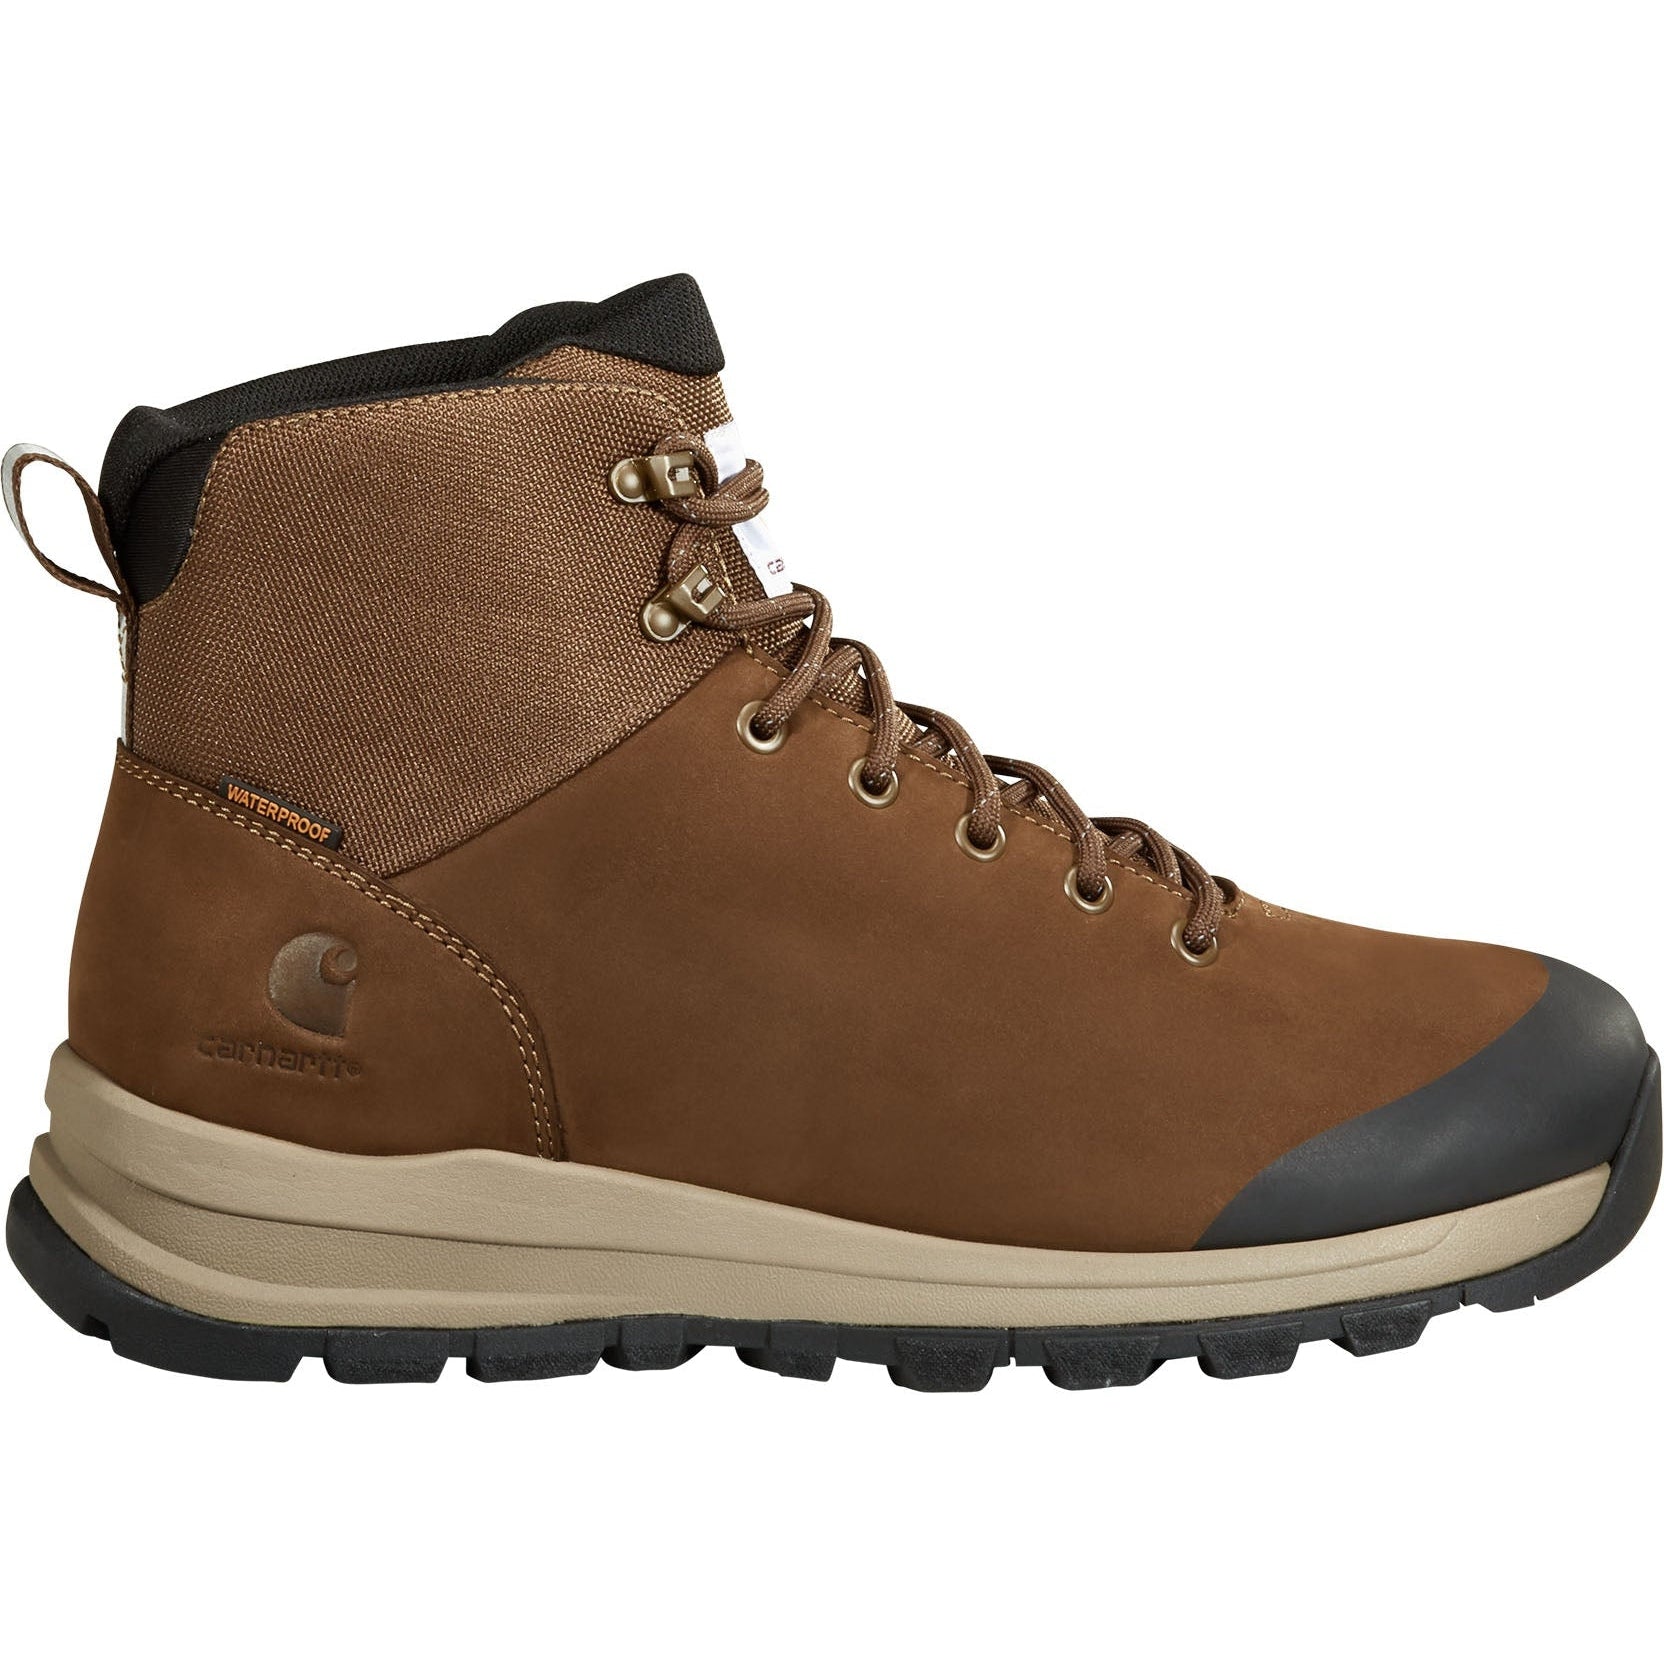 Carhartt Men's 5" WP Soft Toe Hiking Boot - Dark Brown - FH5020-M 8 / Medium / Brown - Overlook Boots